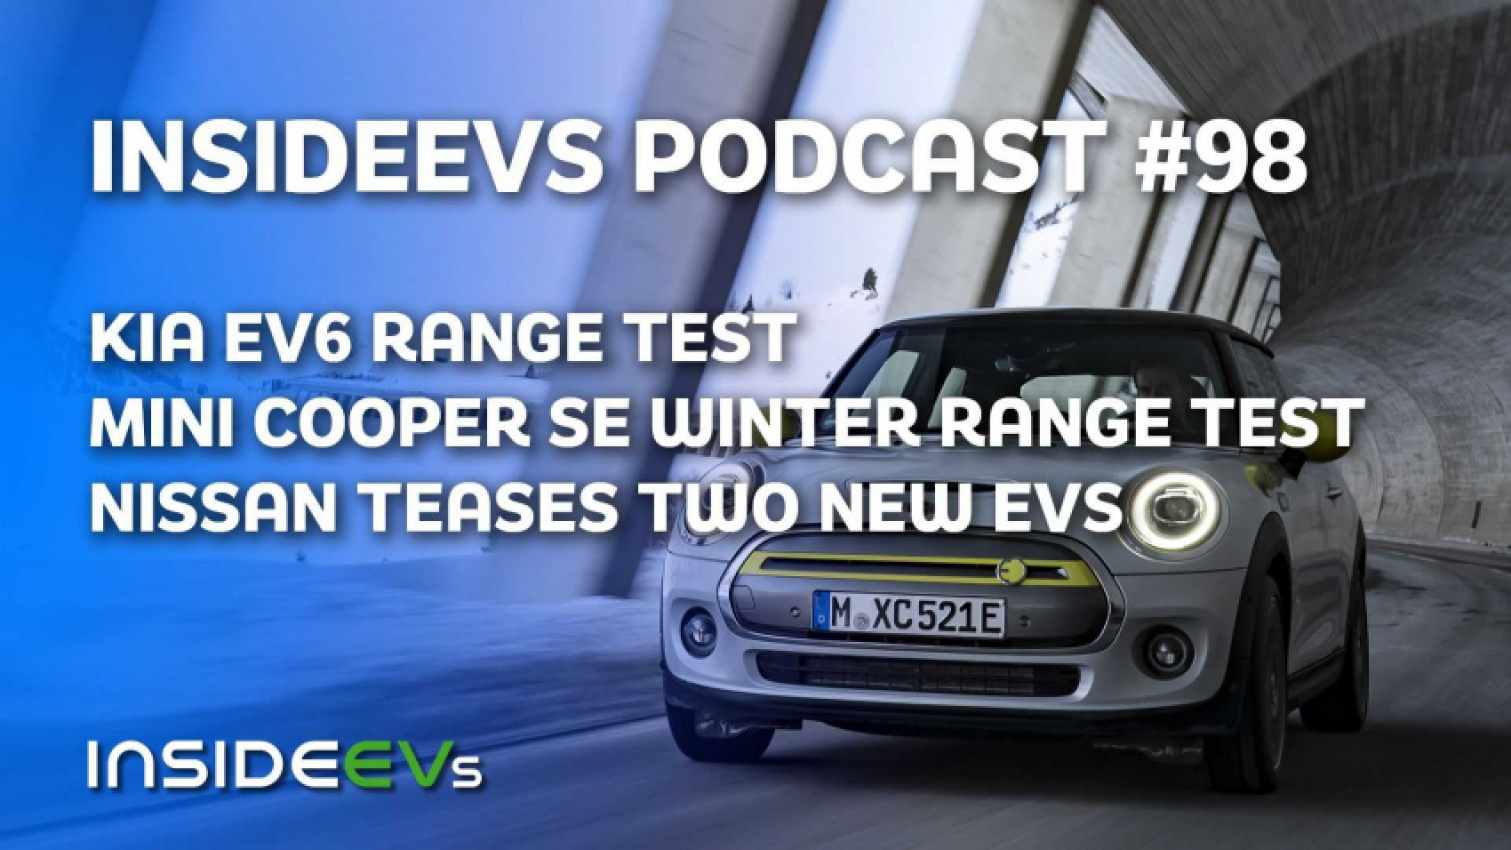 autos, cars, evs, kia, mini, nissan, mini cooper, kia ev6 and mini cooper se highway range tests, nissan teases new evs